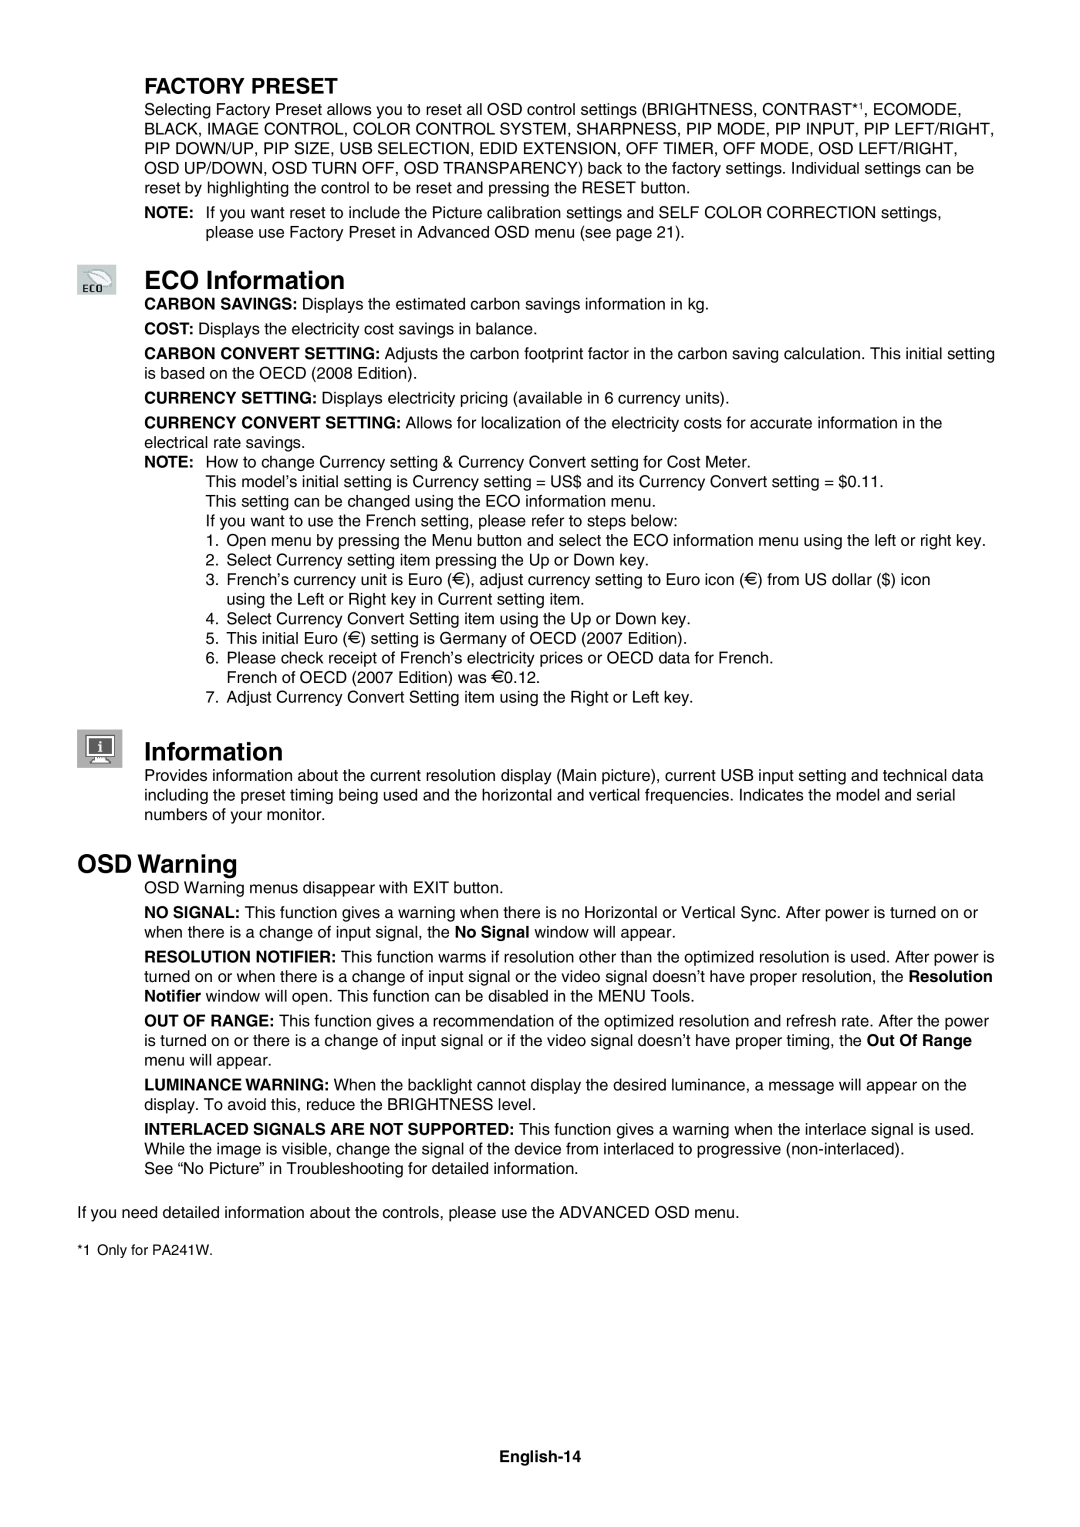 NEC PA271W user manual ECO Information, OSD Warning, Factory Preset 